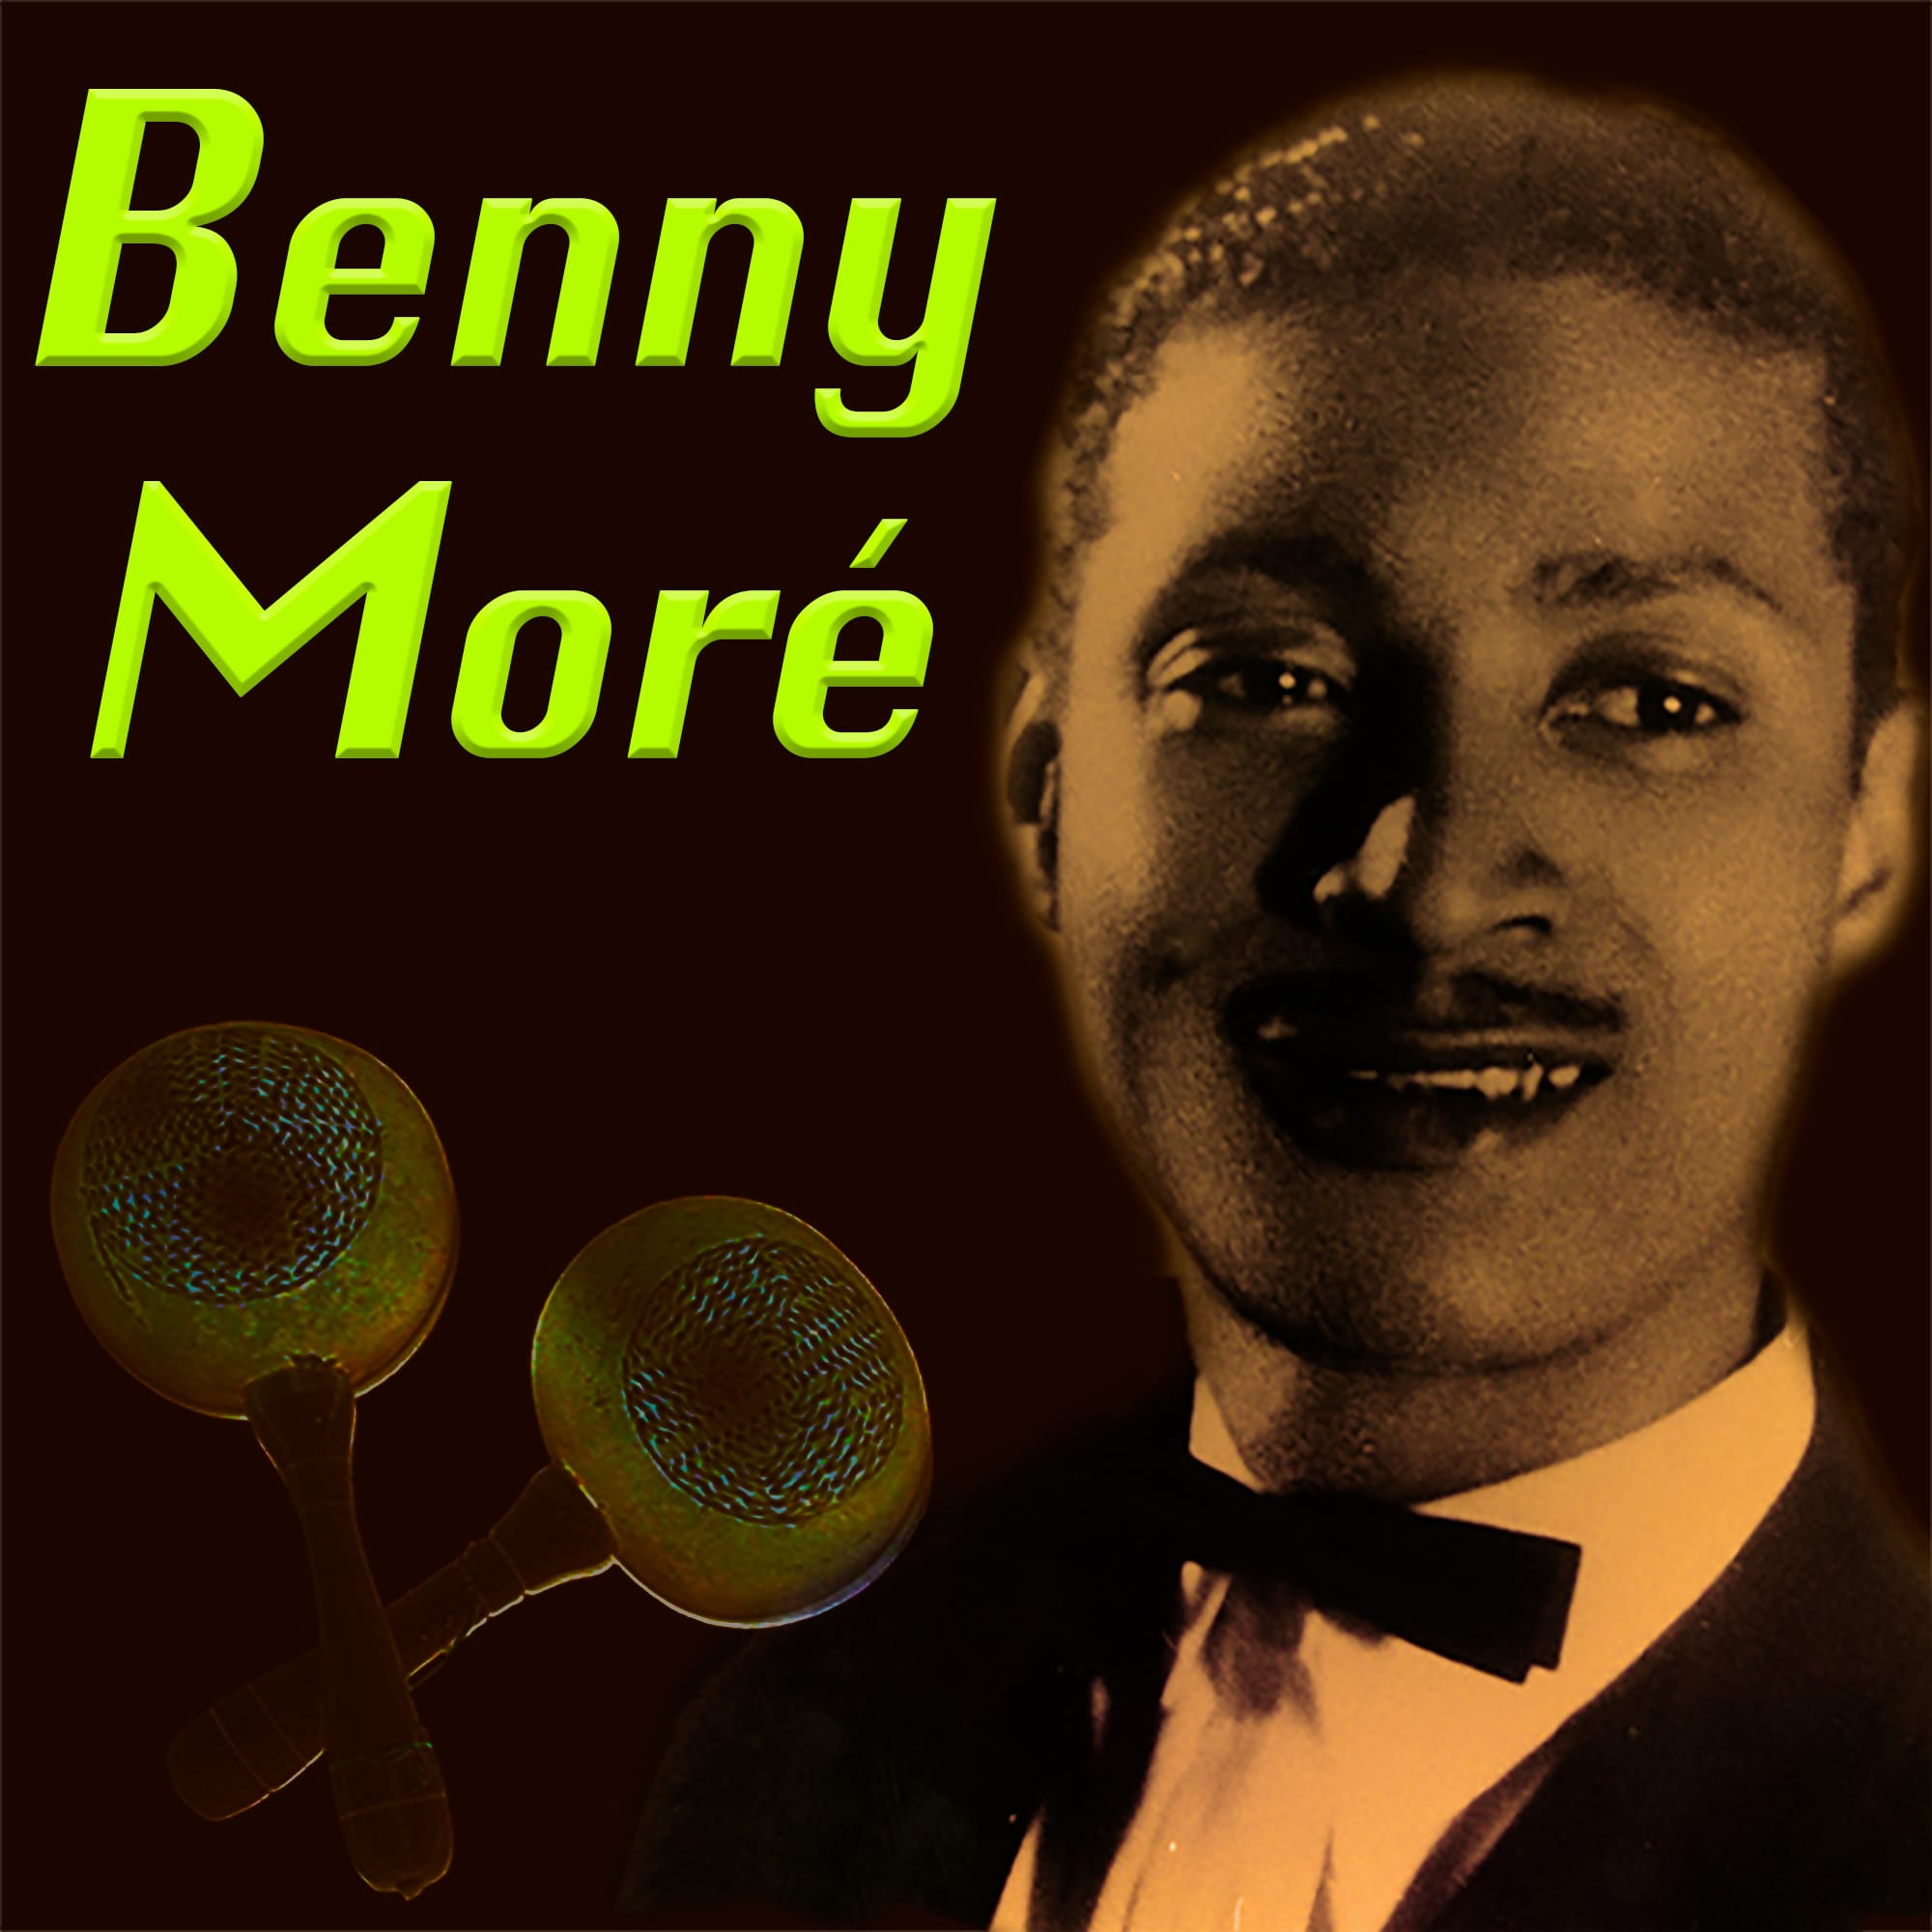 Benny More